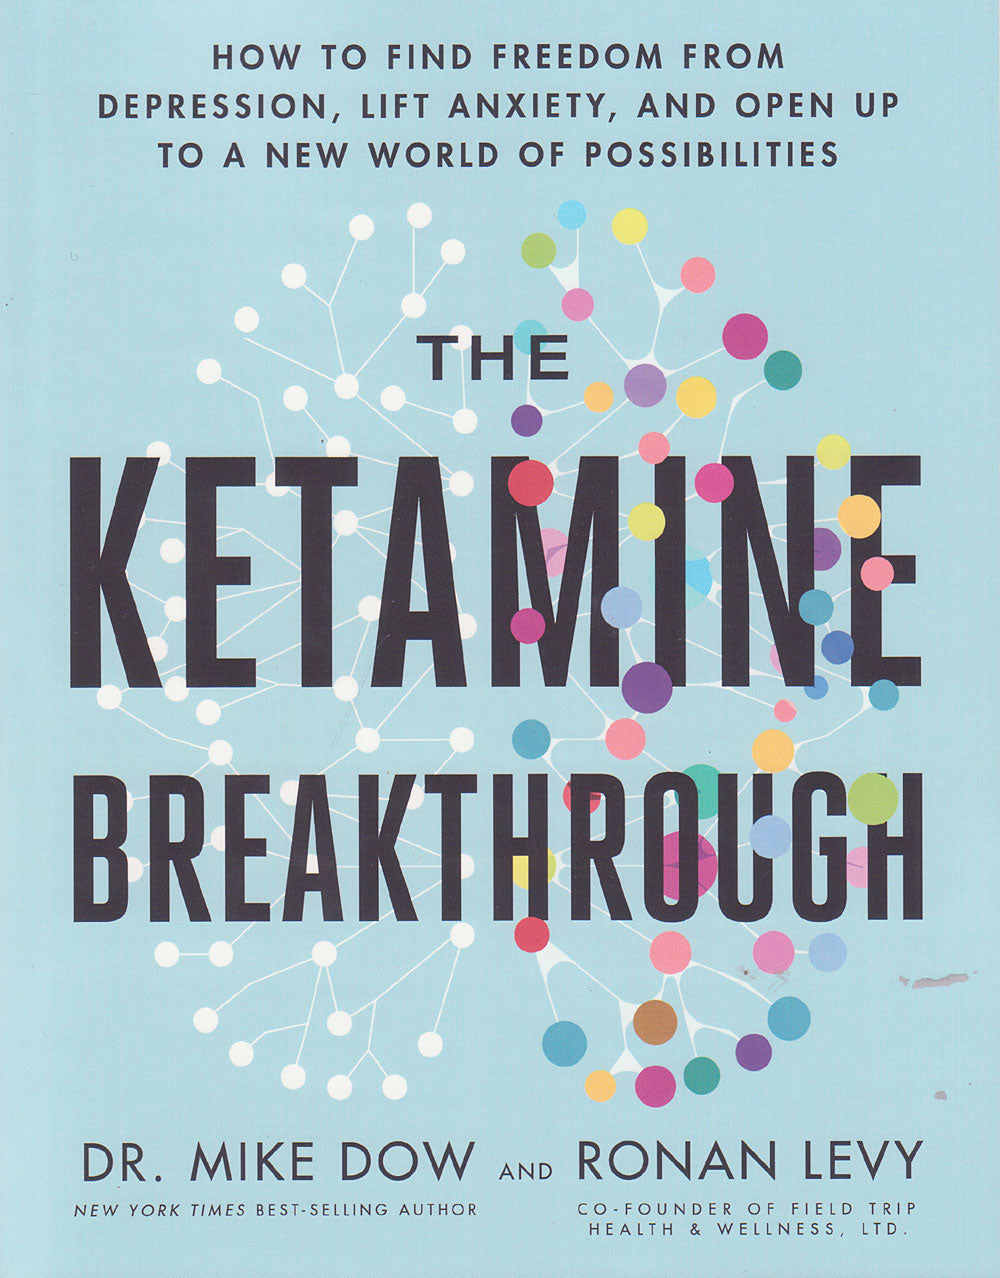 Ketamine Breakthrough